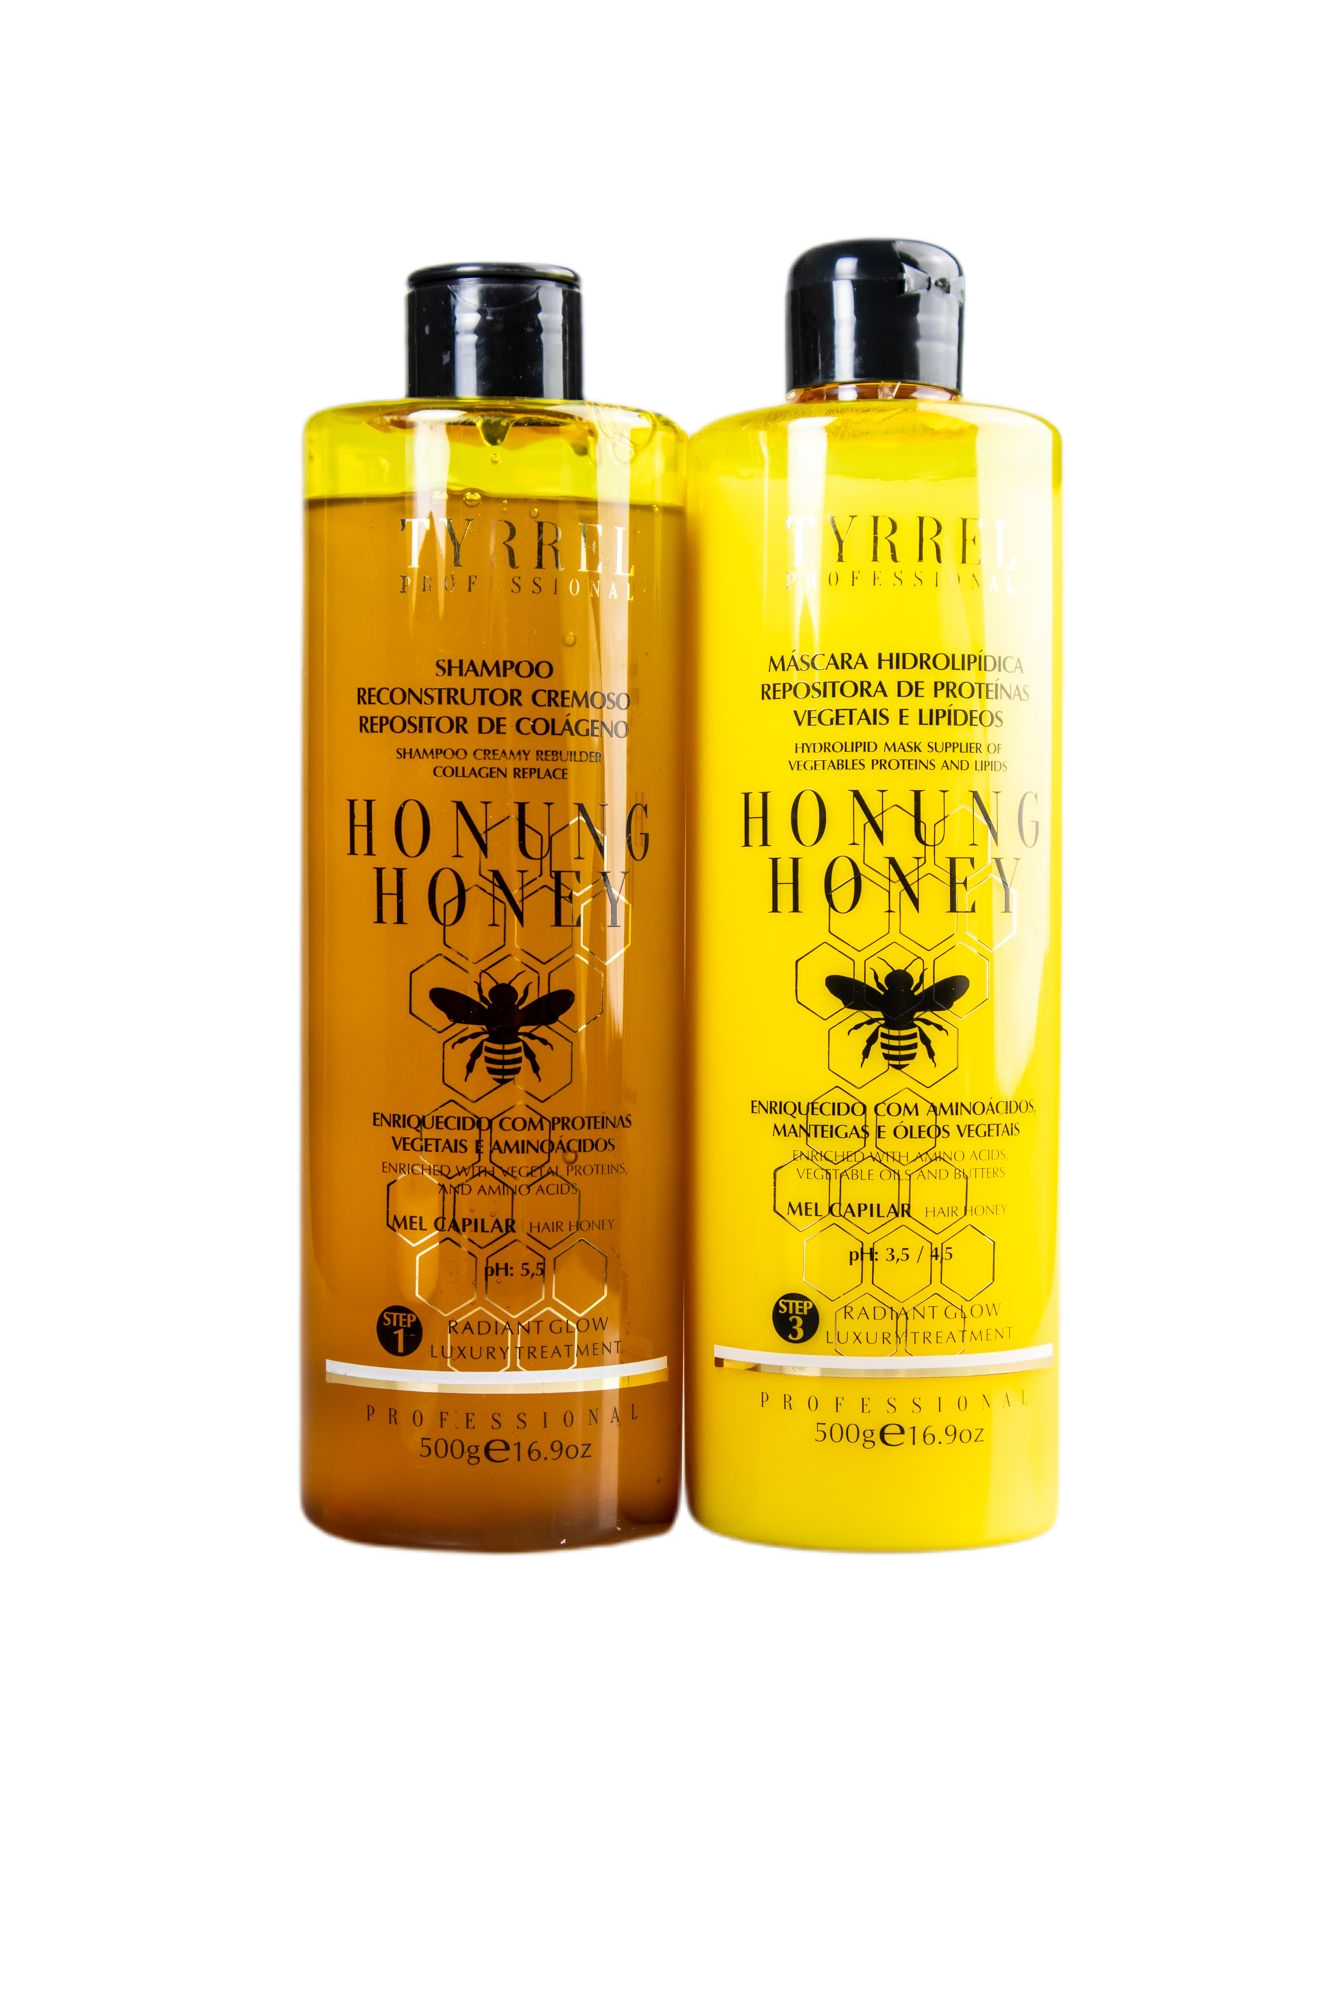 Tyrrel Brazilian Keratin Treatment Honung Honey Vegetable Proteins Lipids Collagen Replenisher Kit 2x500g - Tyrrel